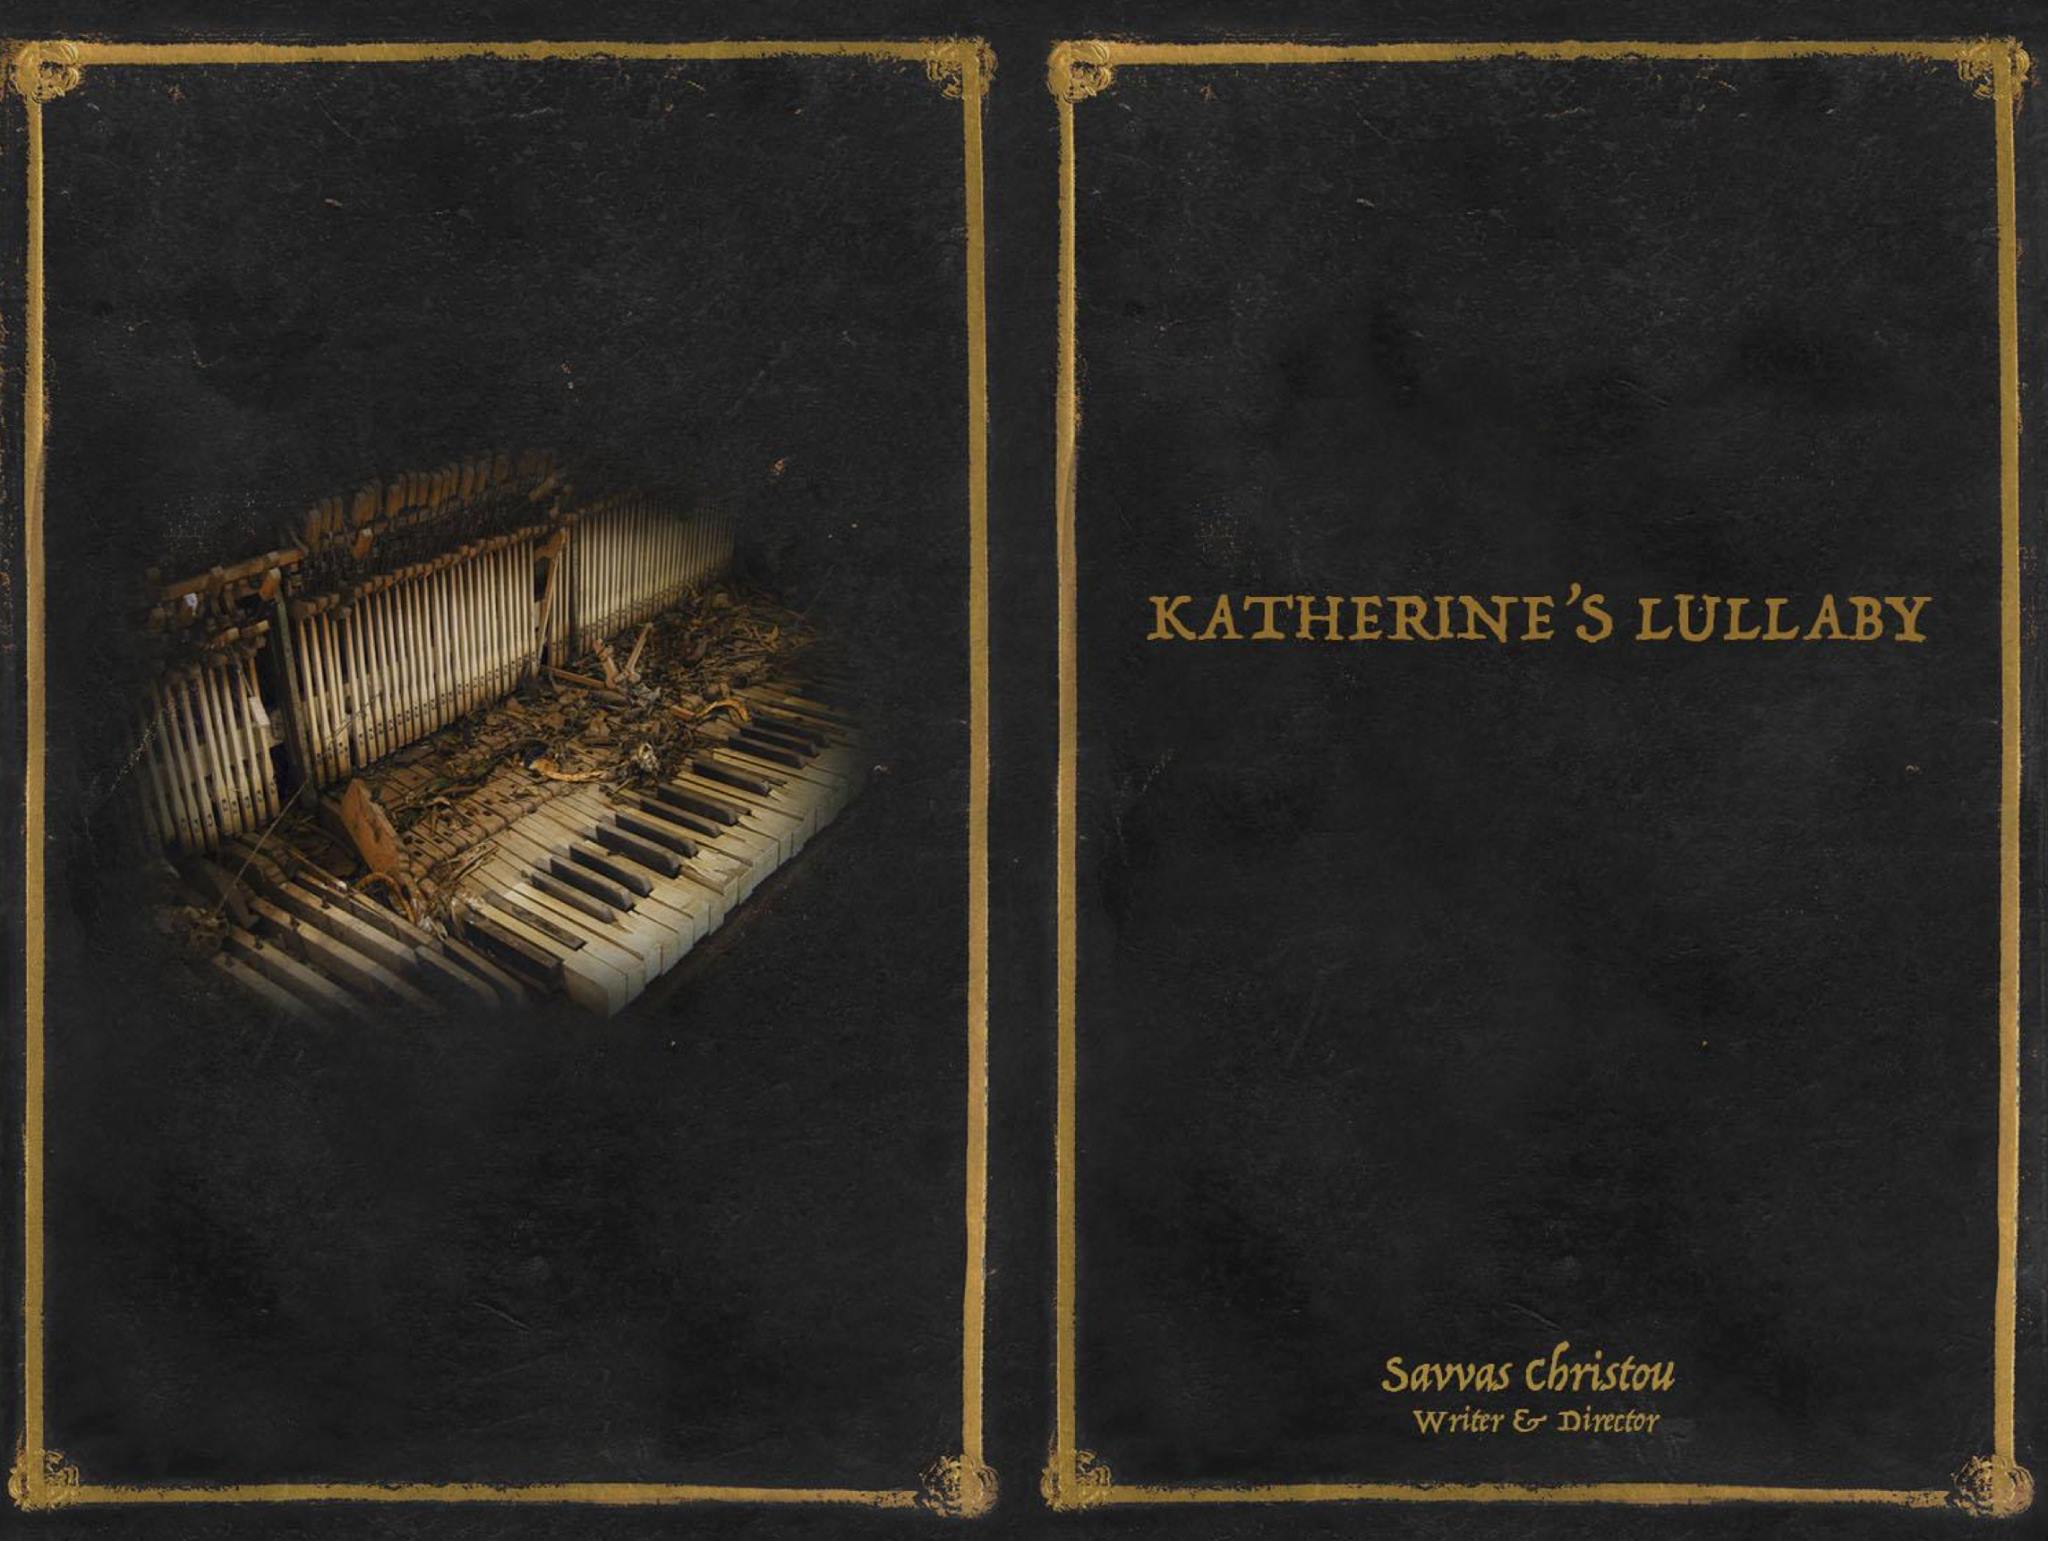 Katherine's lullaby